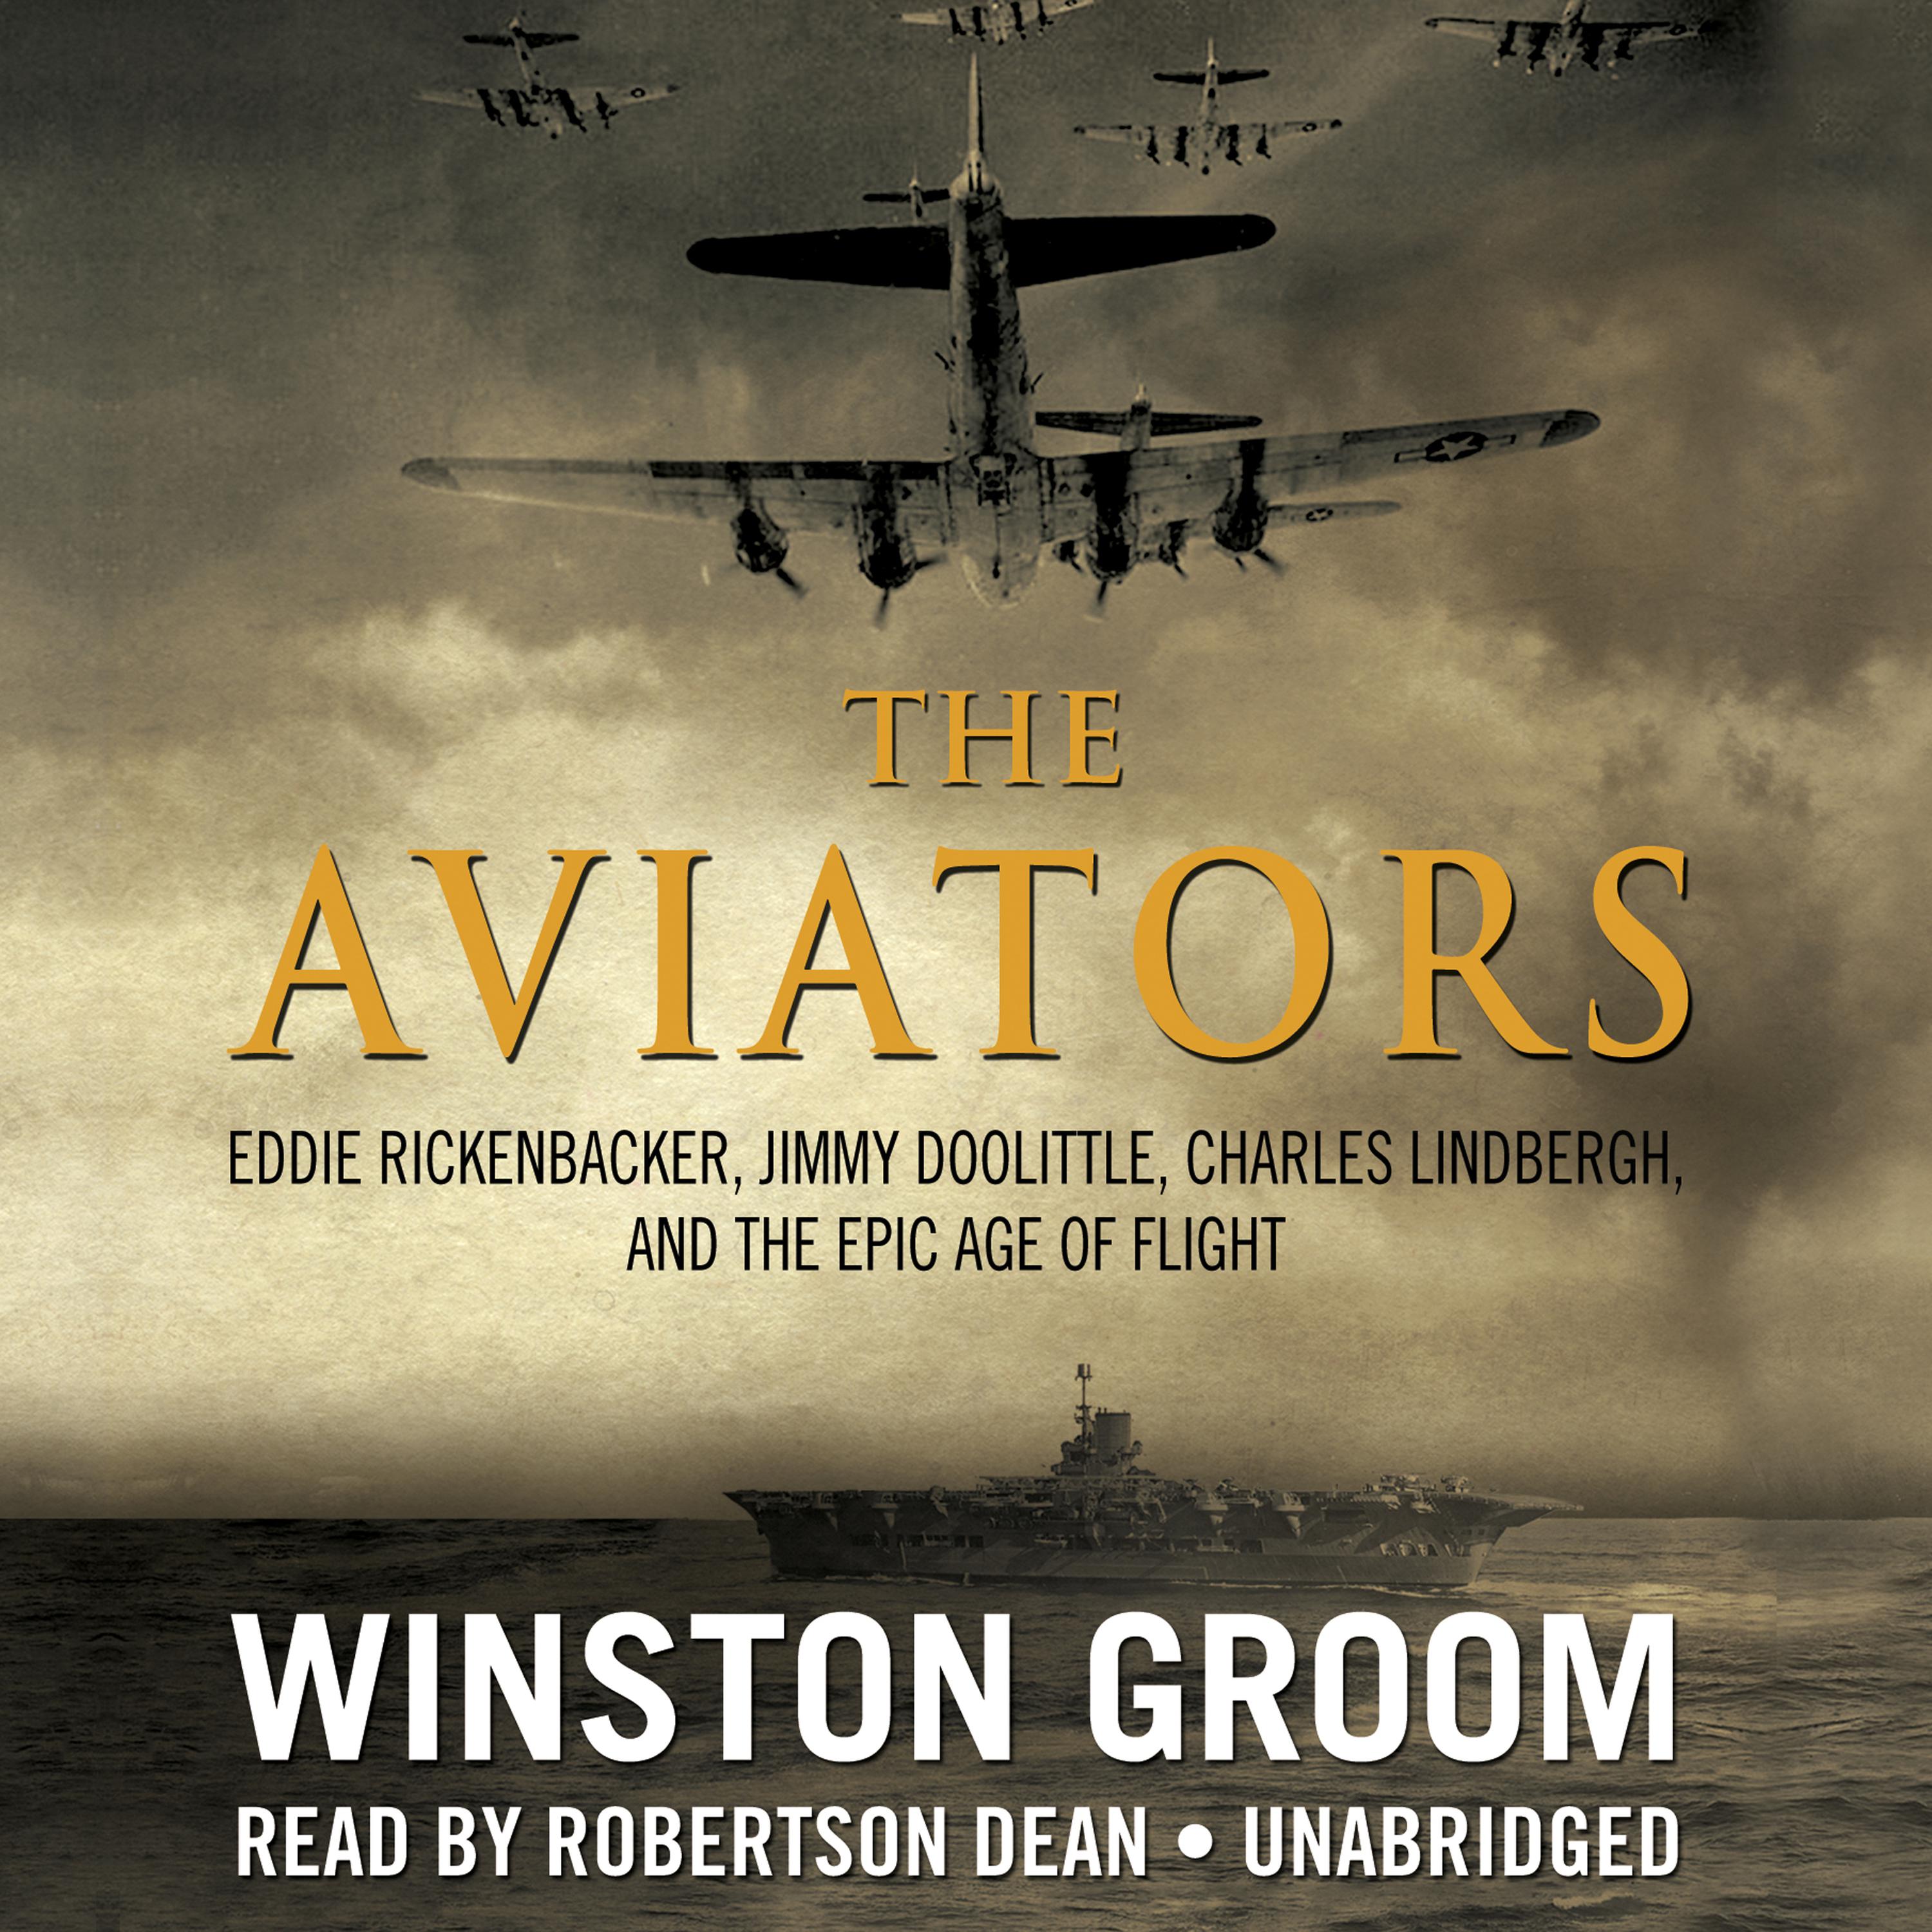 Авиатор книга слушать. Winston Groom. Аудиокнига Авиатор. Aviators Dreams of the Deep обложка. Groom Winston "Forrest Gump".